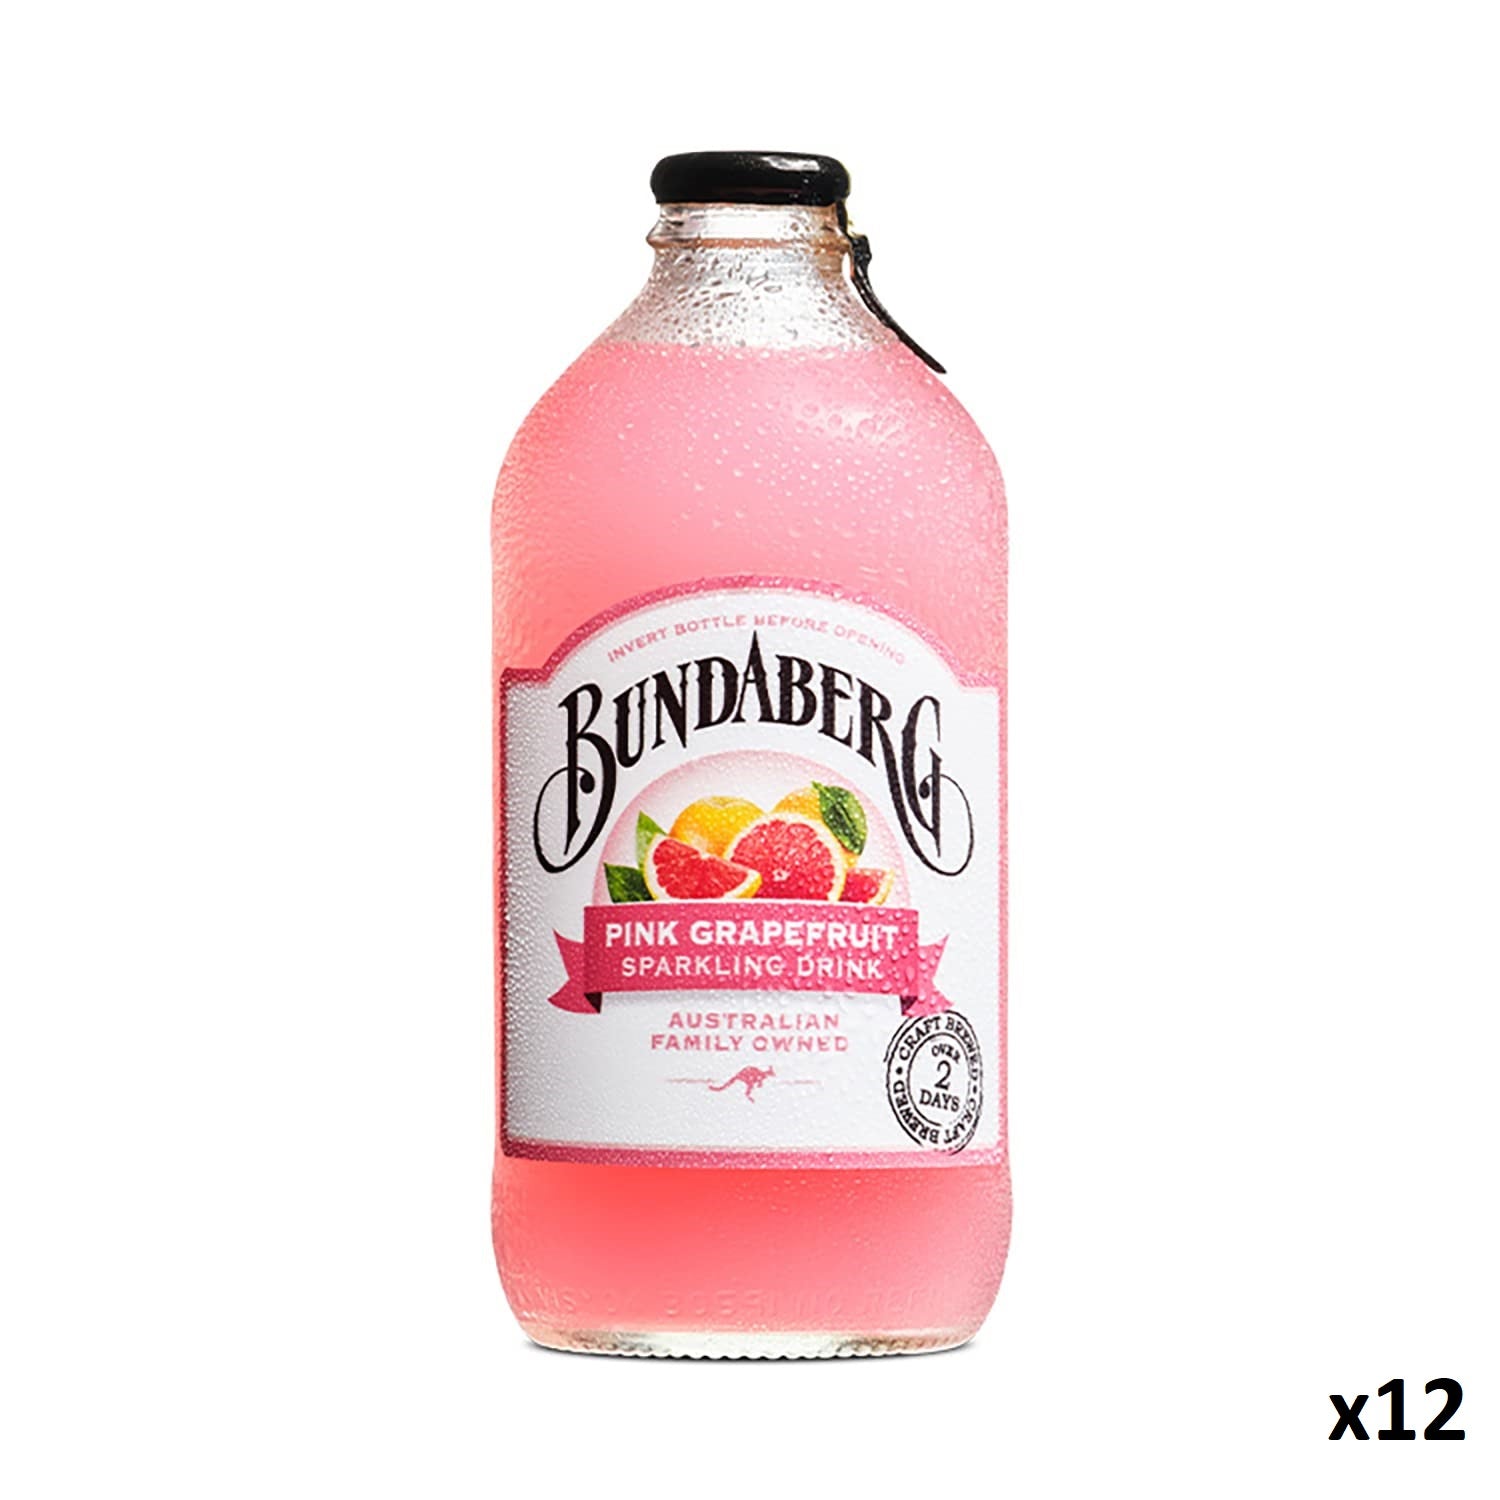 Bundaberg Pink Grapefruit 375ml x12